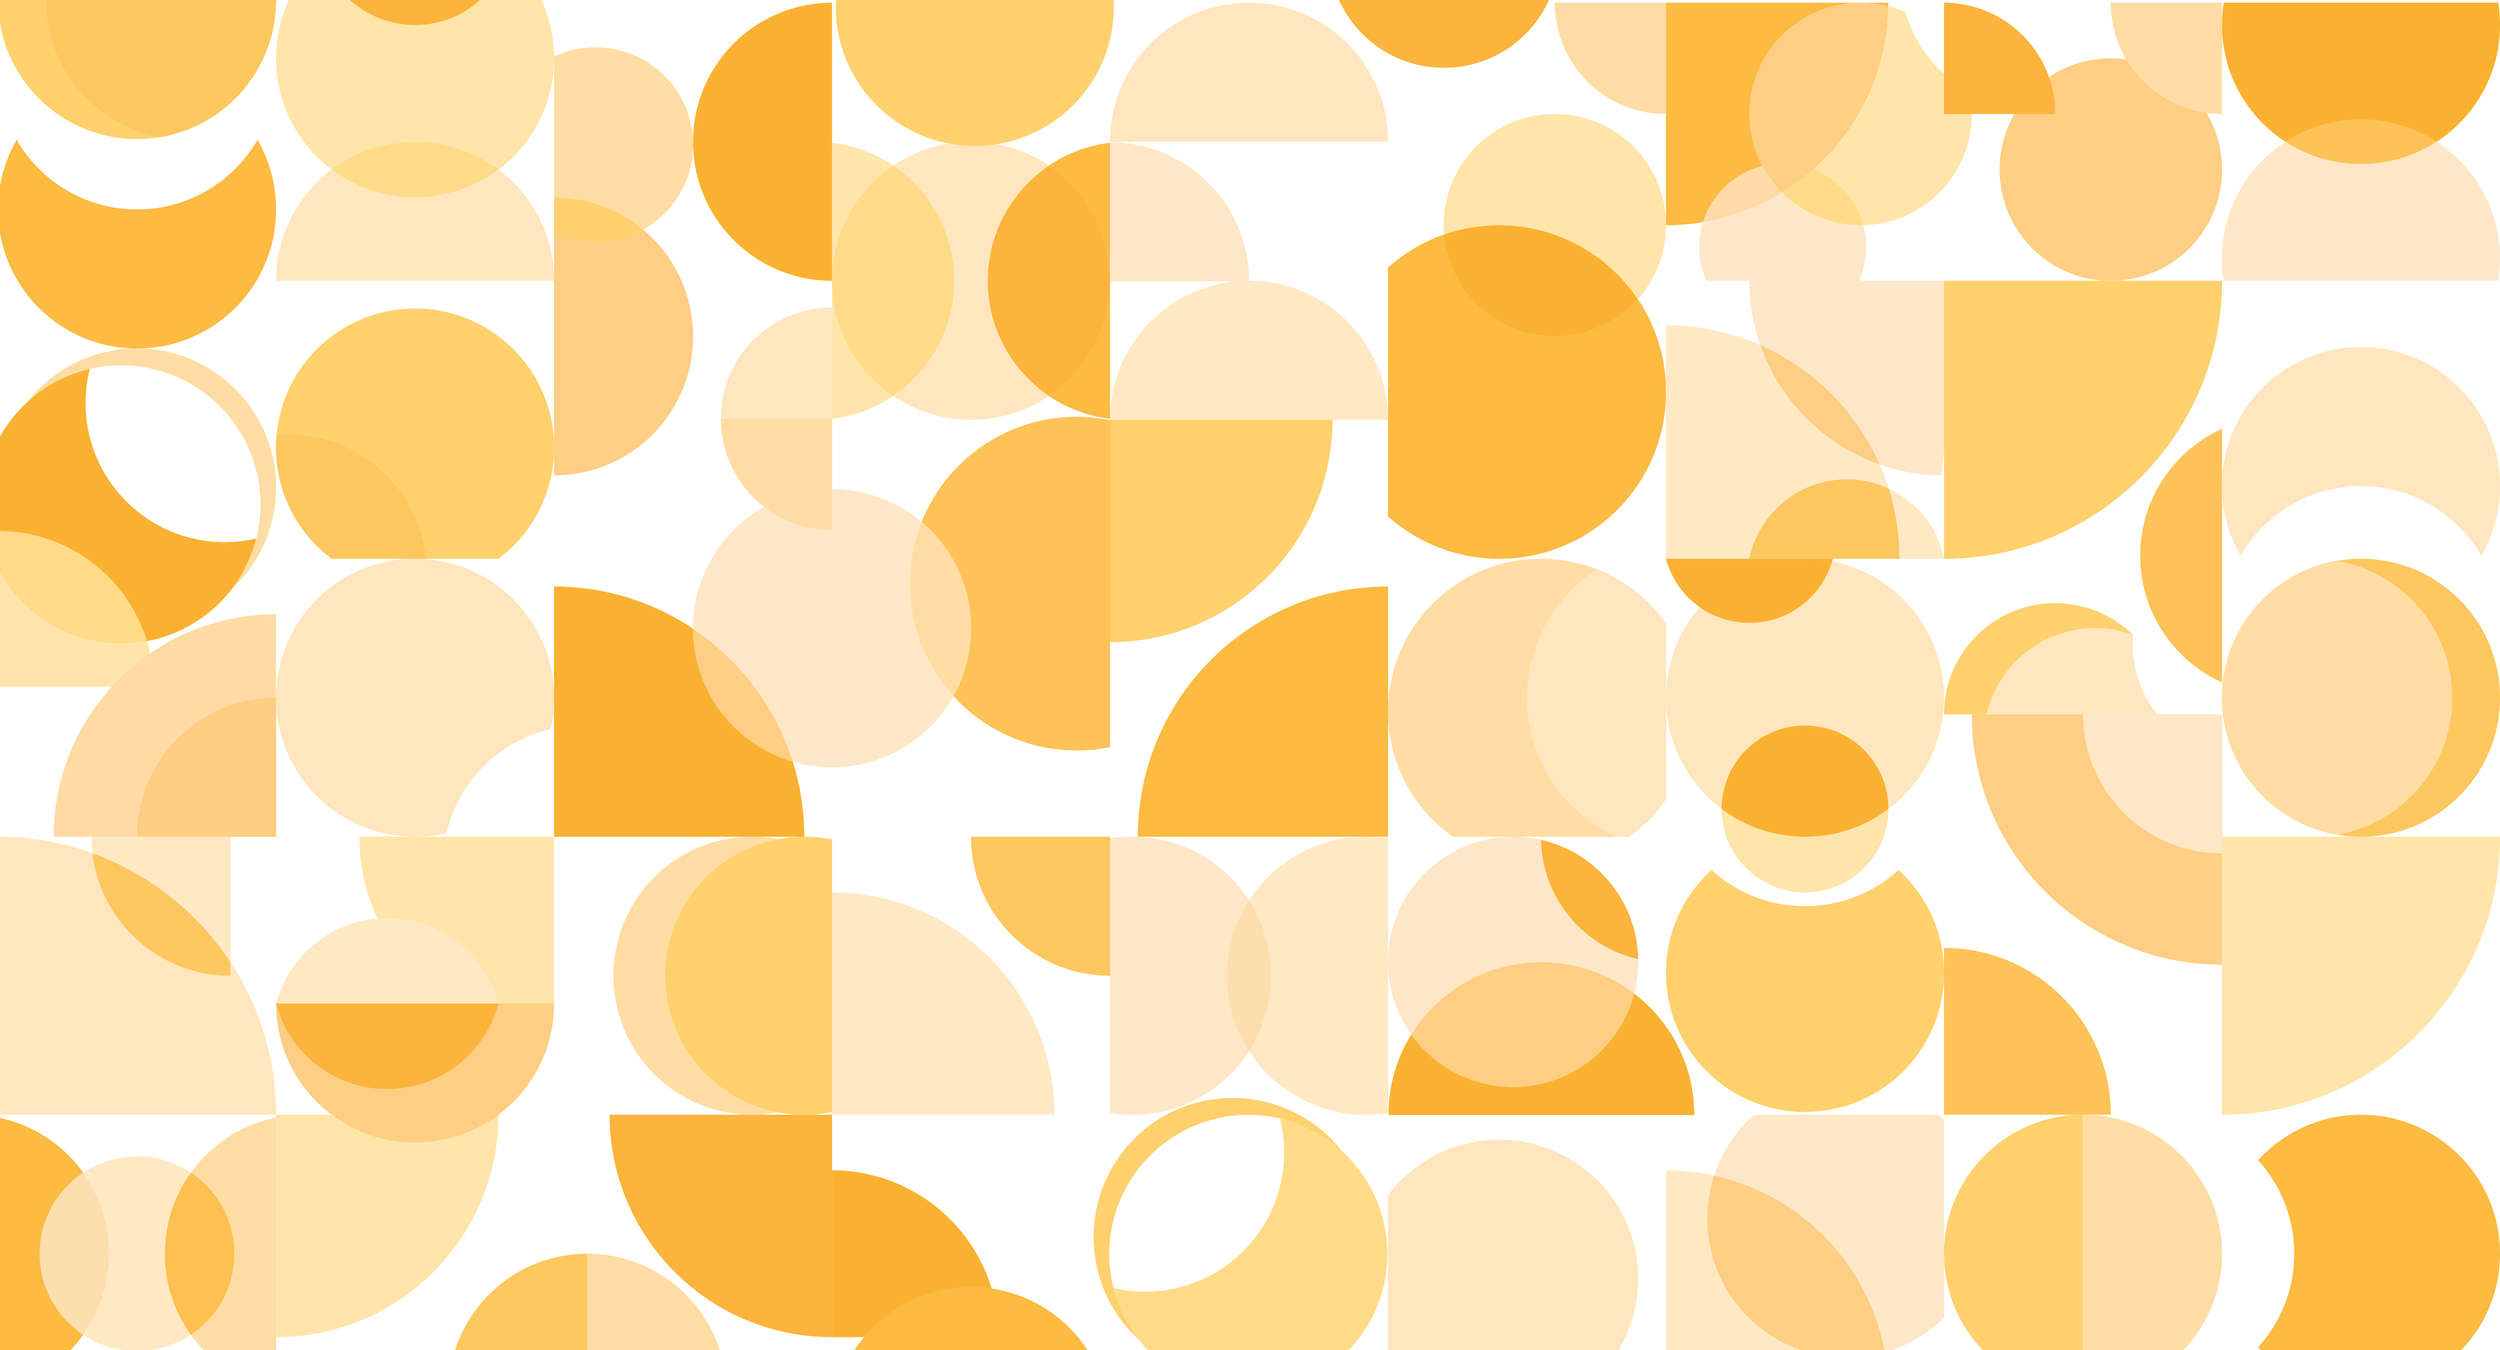             Muurschildering retro design, geometrisch patroon - oranje, geel, wit
        